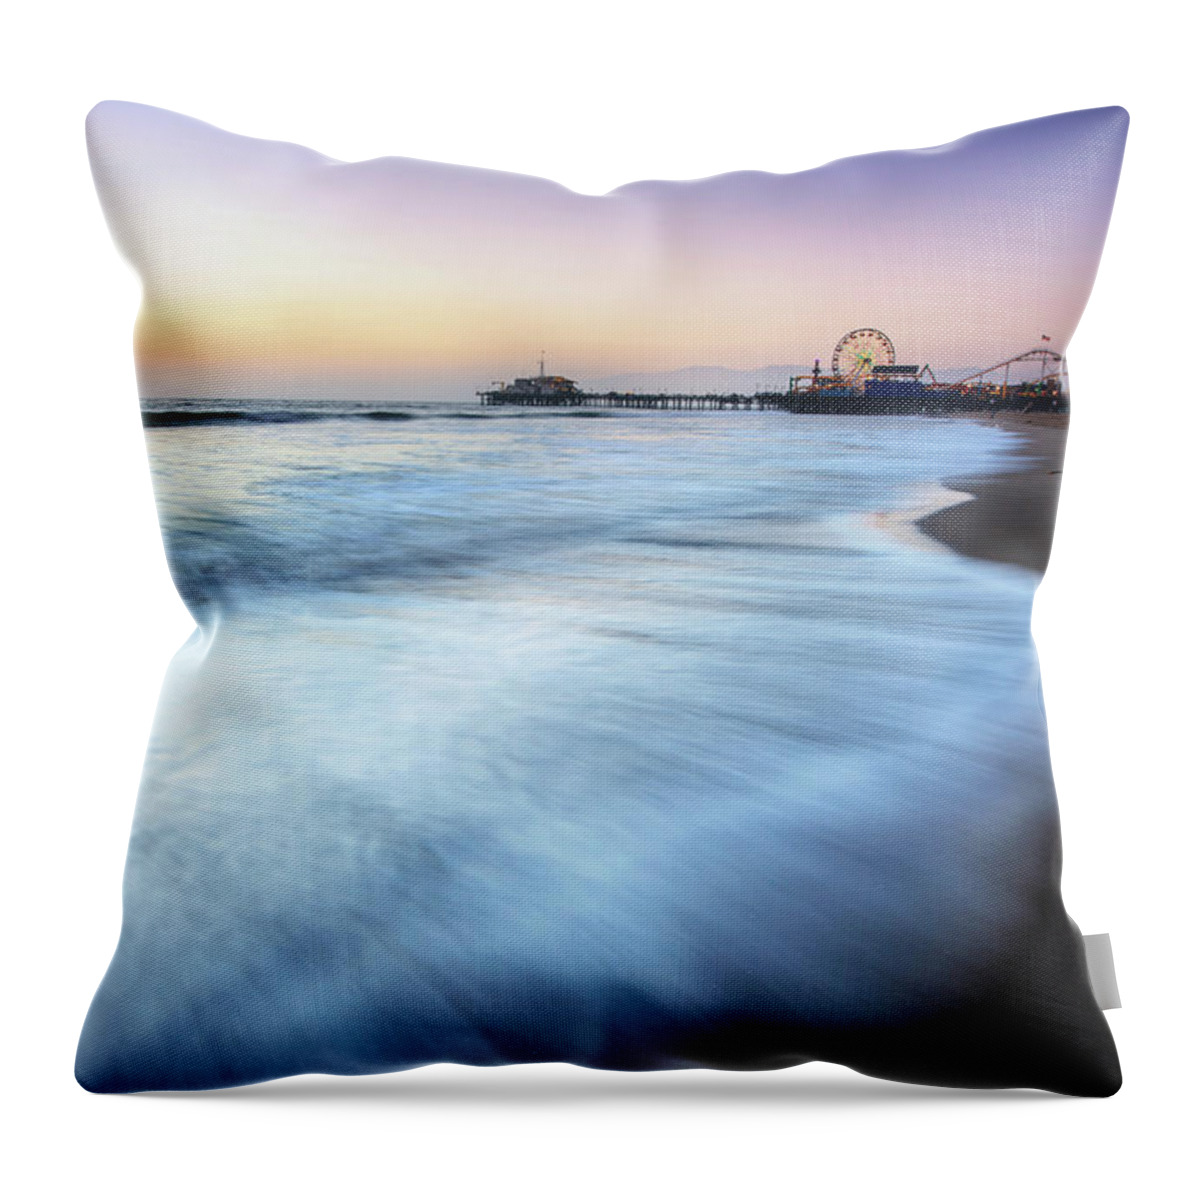 Scenics Throw Pillow featuring the photograph Santa Monica Beach by Piriya Photography